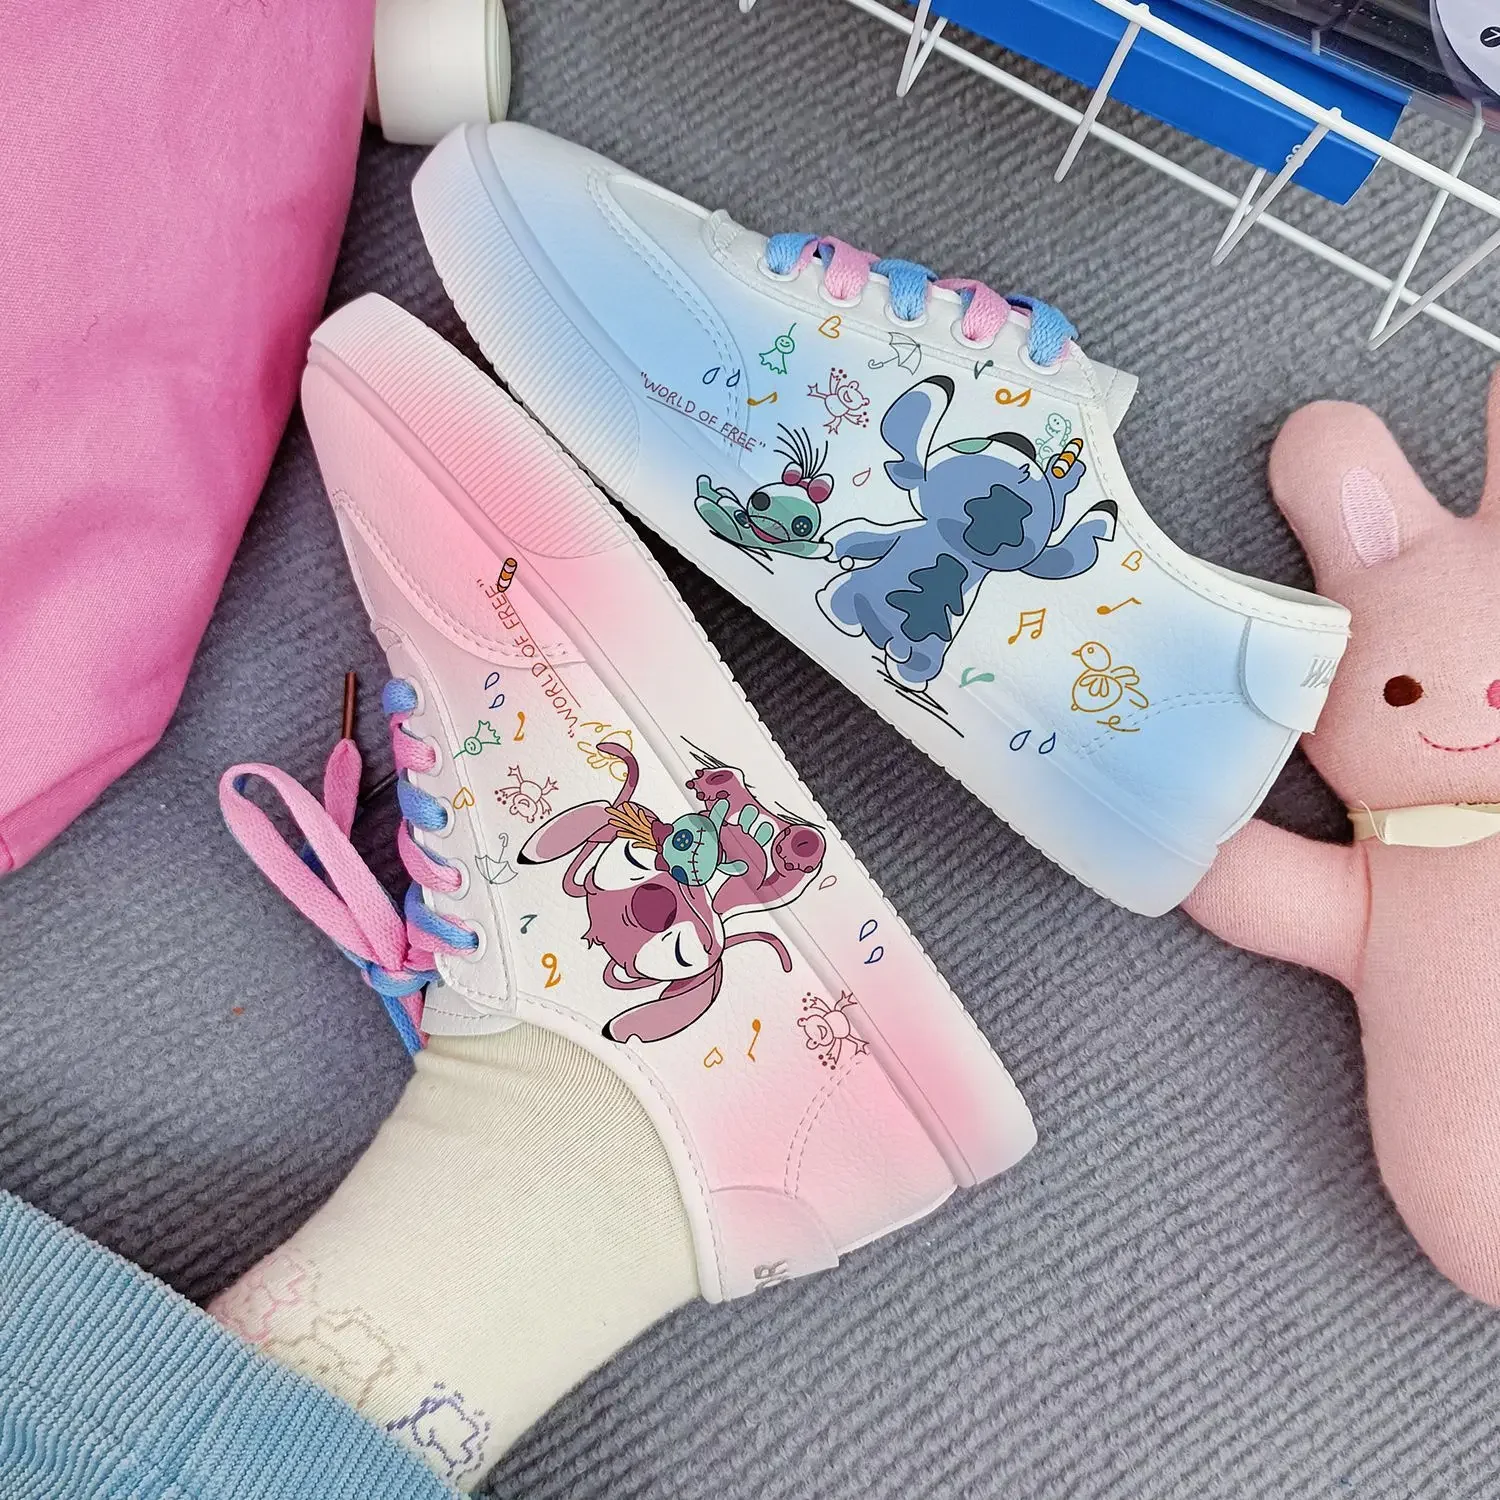 

Disney girls cartoon Stitch princess cute Casual shoes non-slip soft bottom sports shoes for girlfriend gift